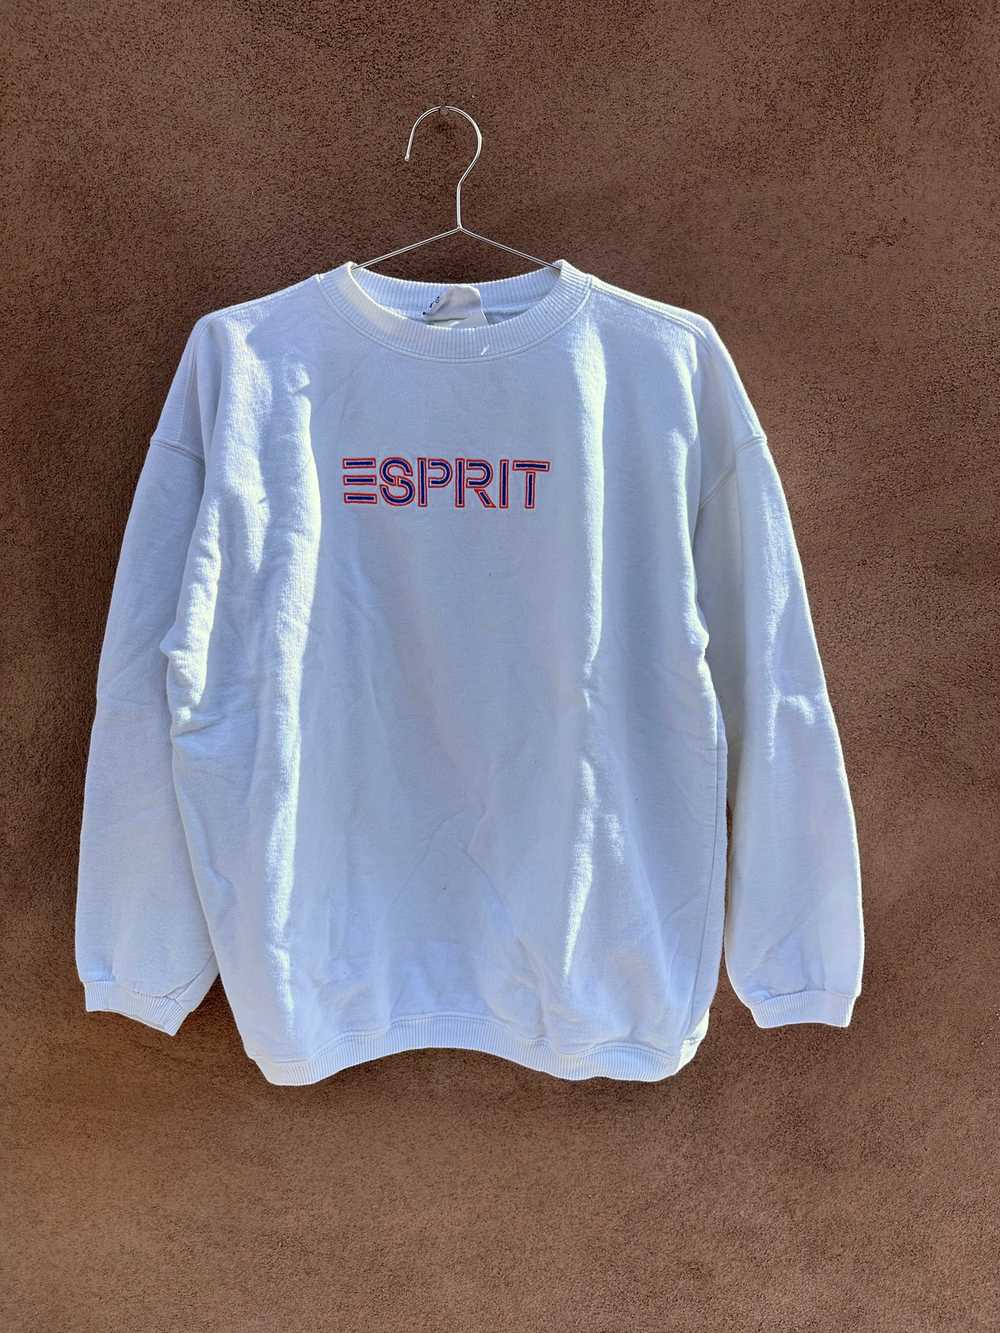 1980's Embroidered ESPRIT Sweatshirt - image 1